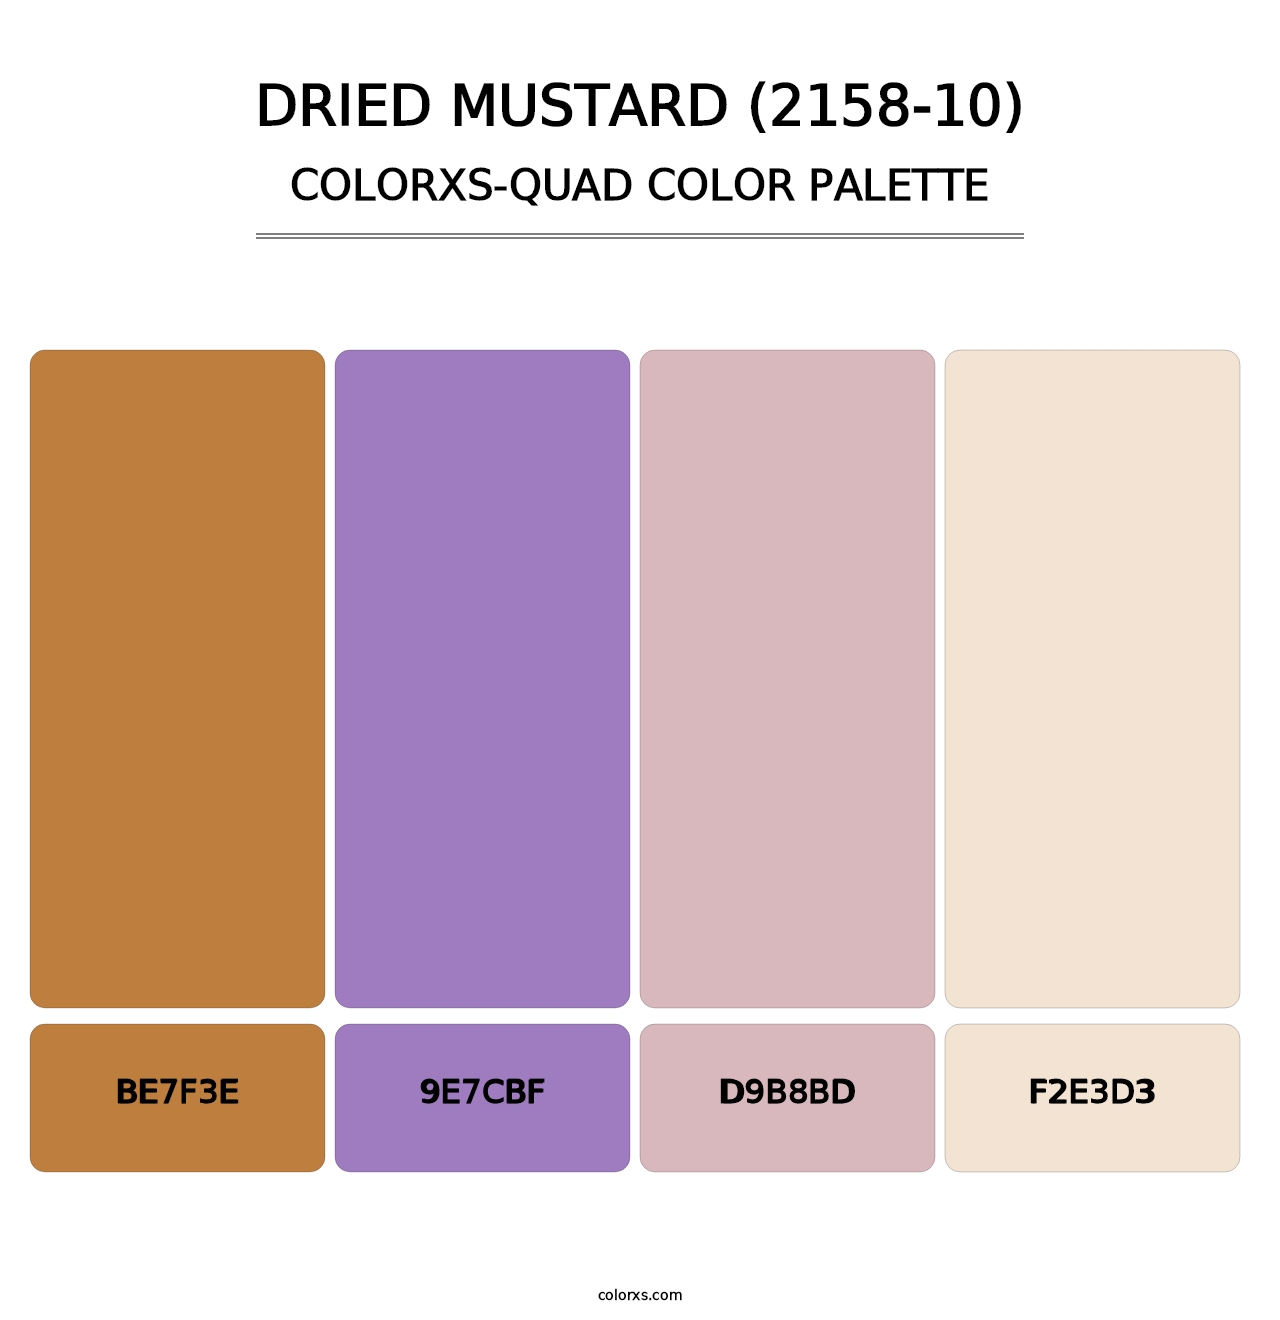 Dried Mustard (2158-10) - Colorxs Quad Palette